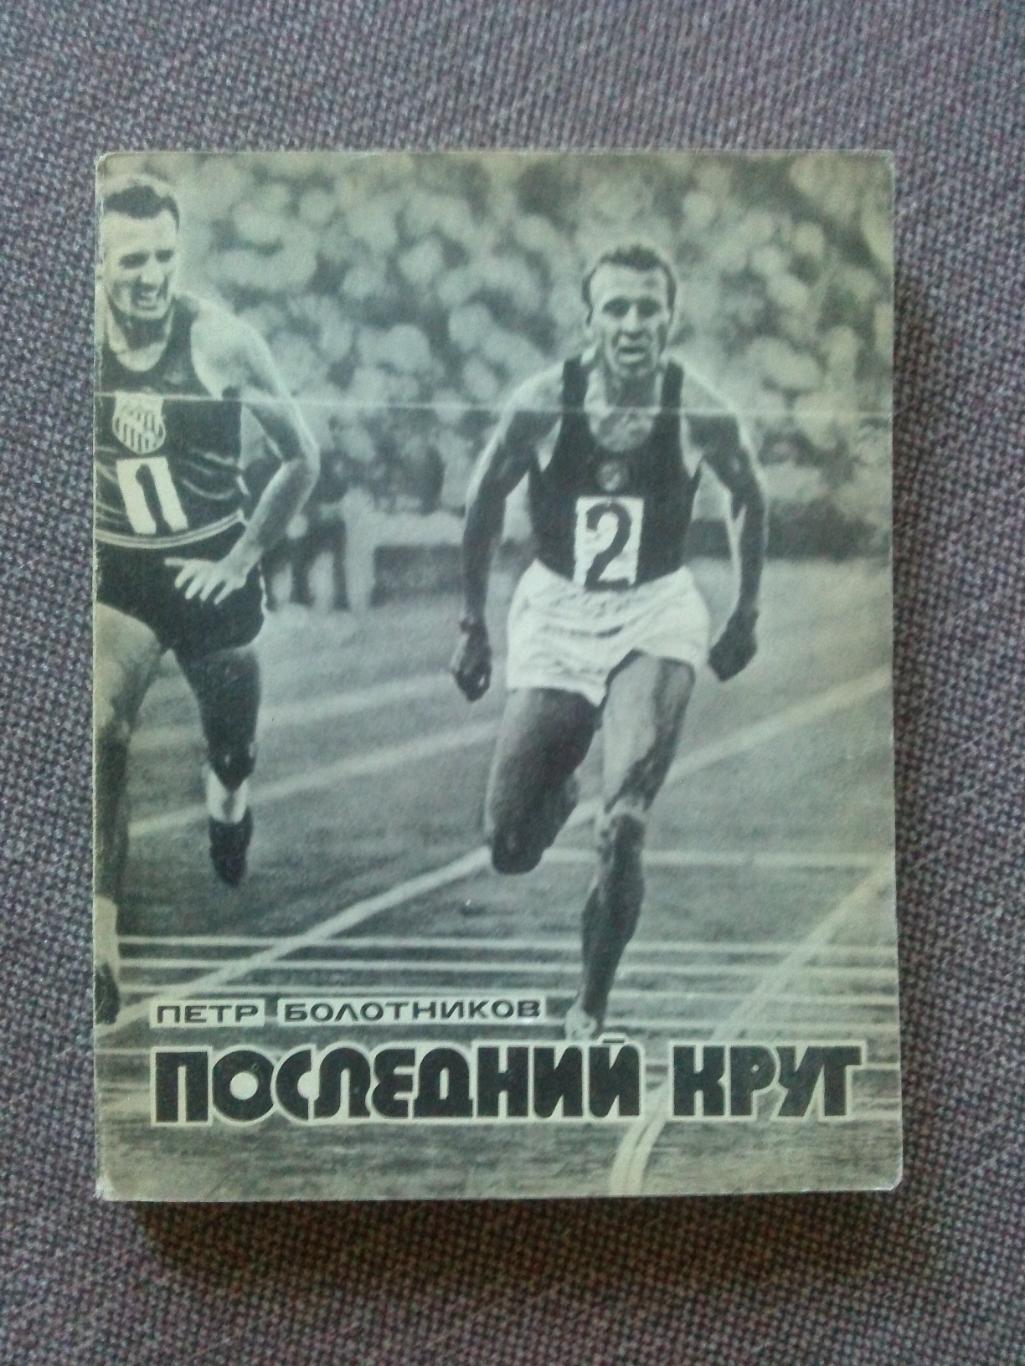 Петр Болотников - Последний круг 1975 г. (Легкая атлетика , спорт , Олимпиада)